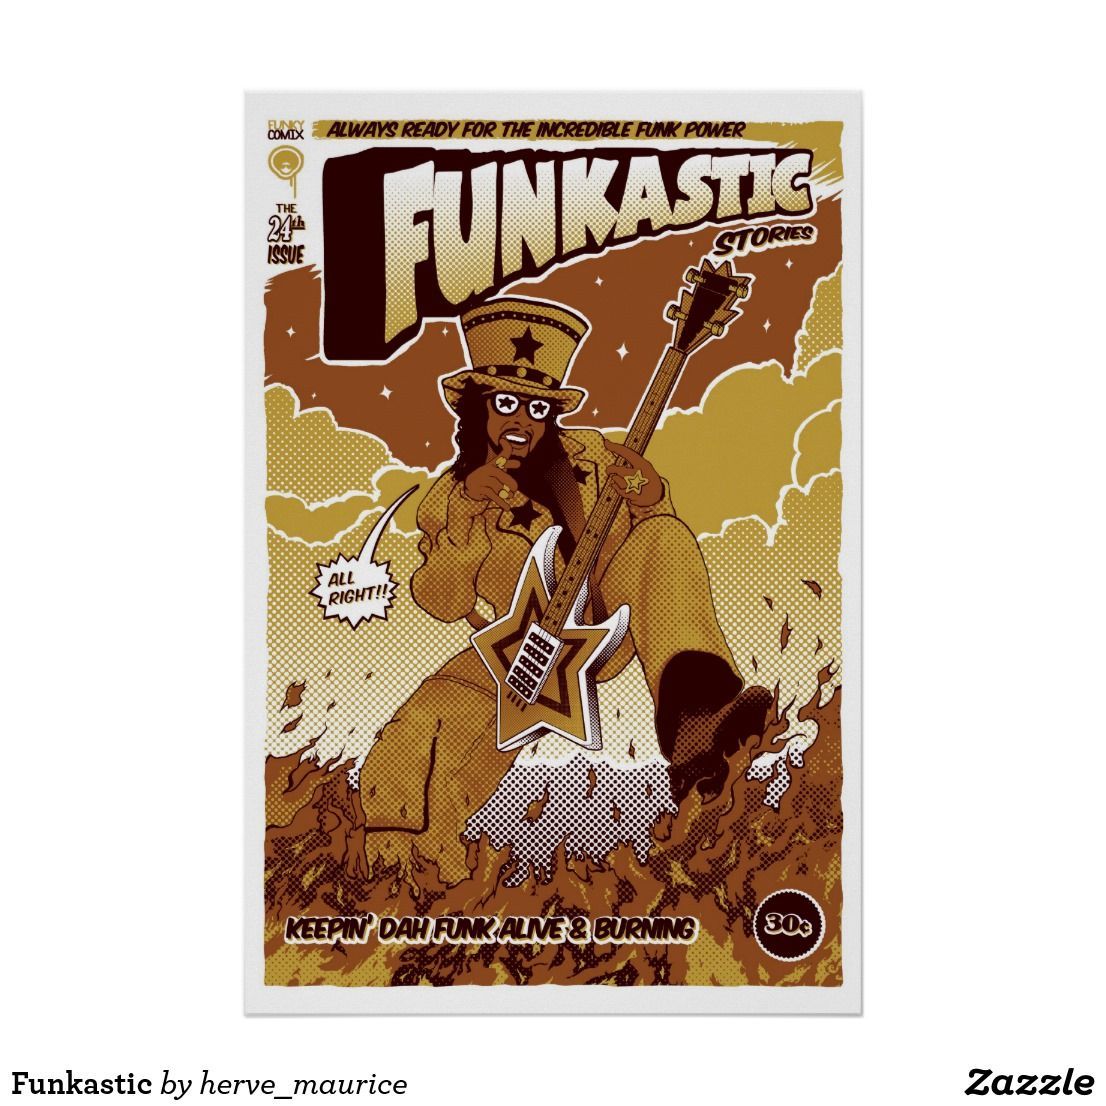 Funkastic Poster. Zazzle.com. The incredibles, Parliament funkadelic, Bootsy collins